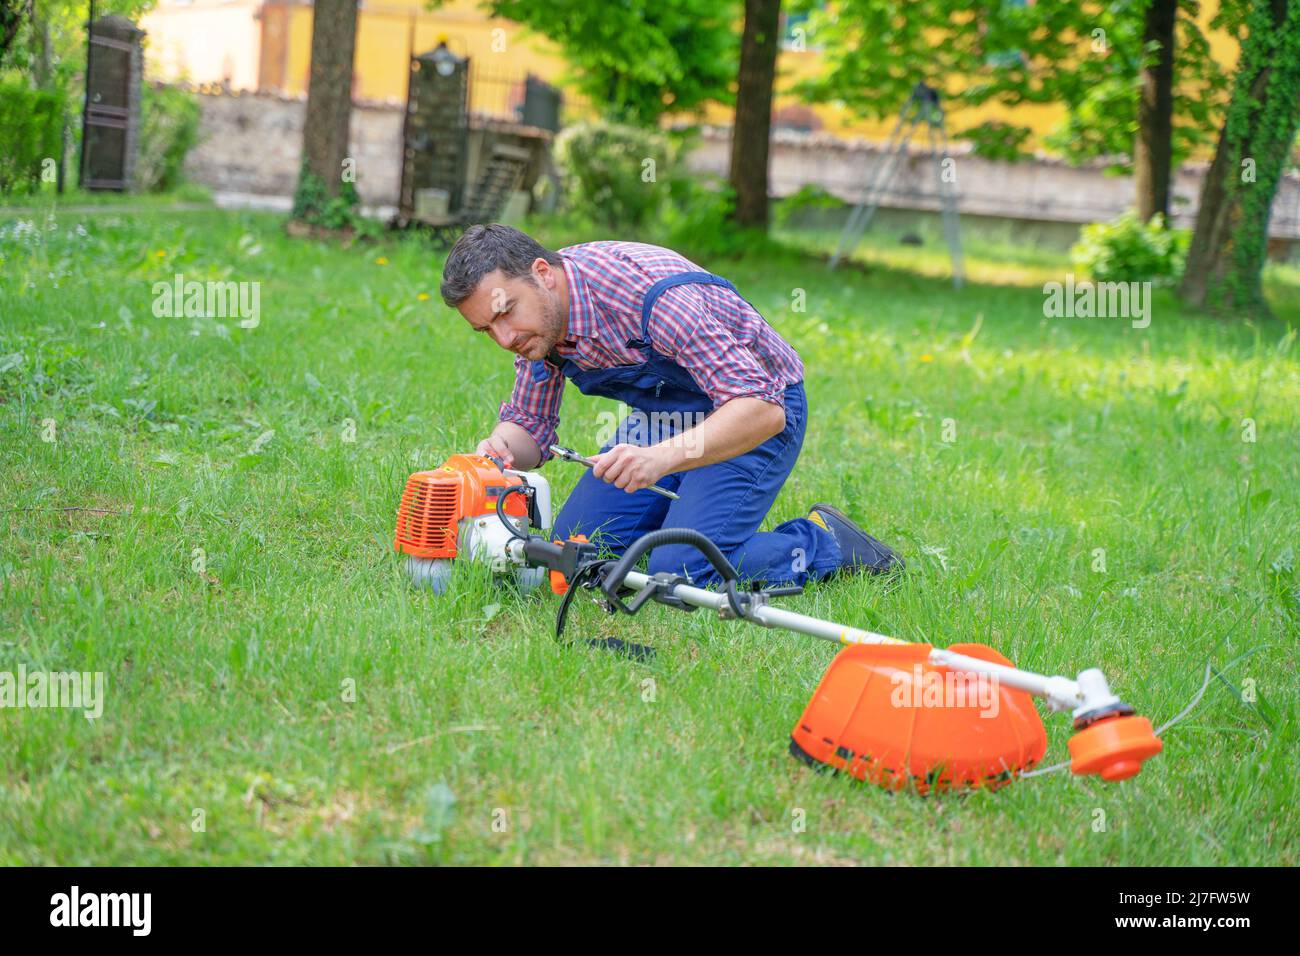 One gardener mowing grass fixing brush cutter problem Stock Photo